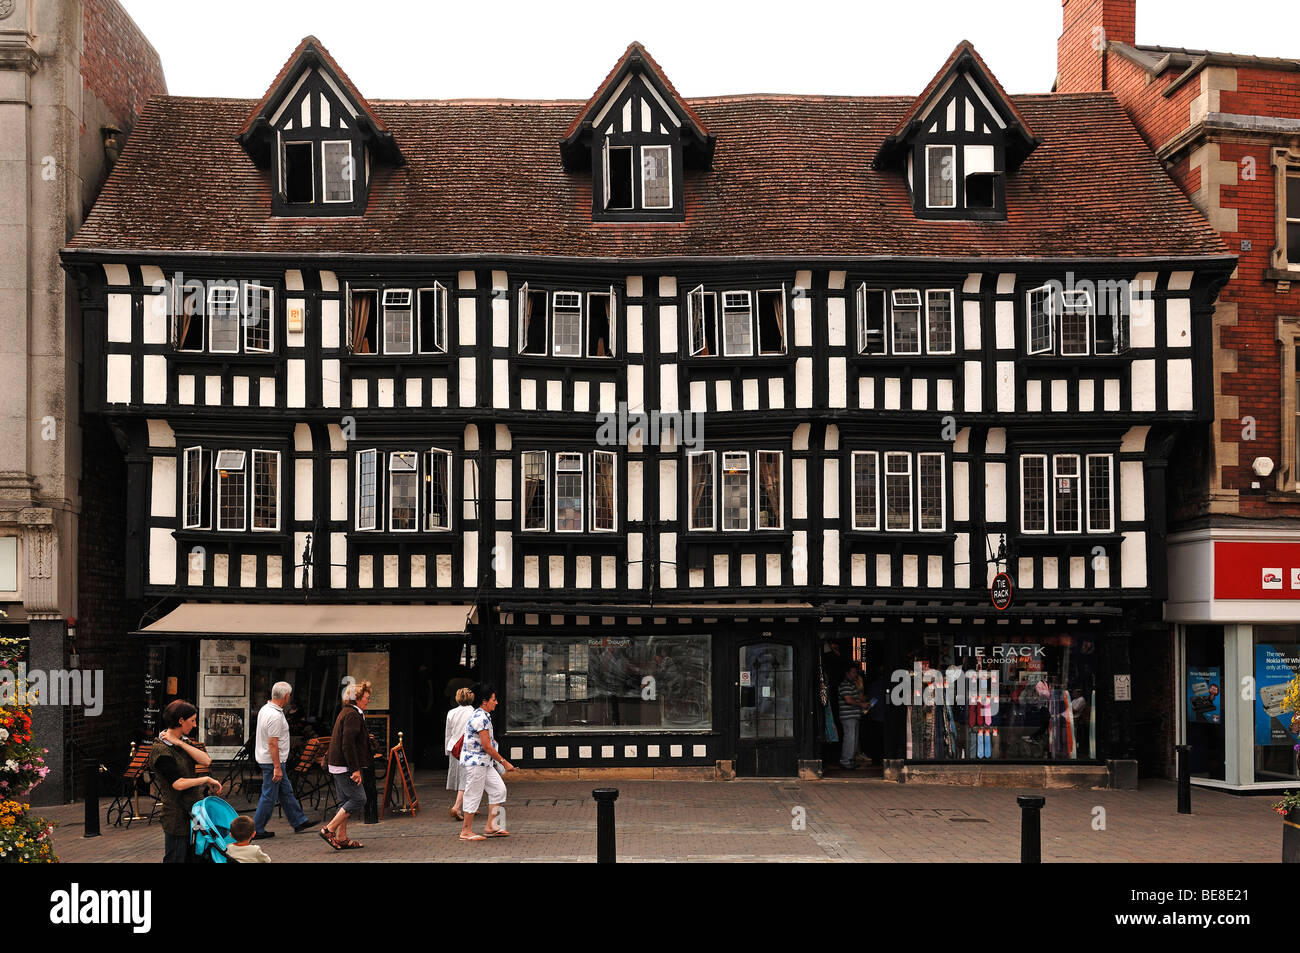 Vieille maison à colombages de style Tudor House, High Street, Lincoln, Lincolnshire, Angleterre, Royaume-Uni, Europe Banque D'Images